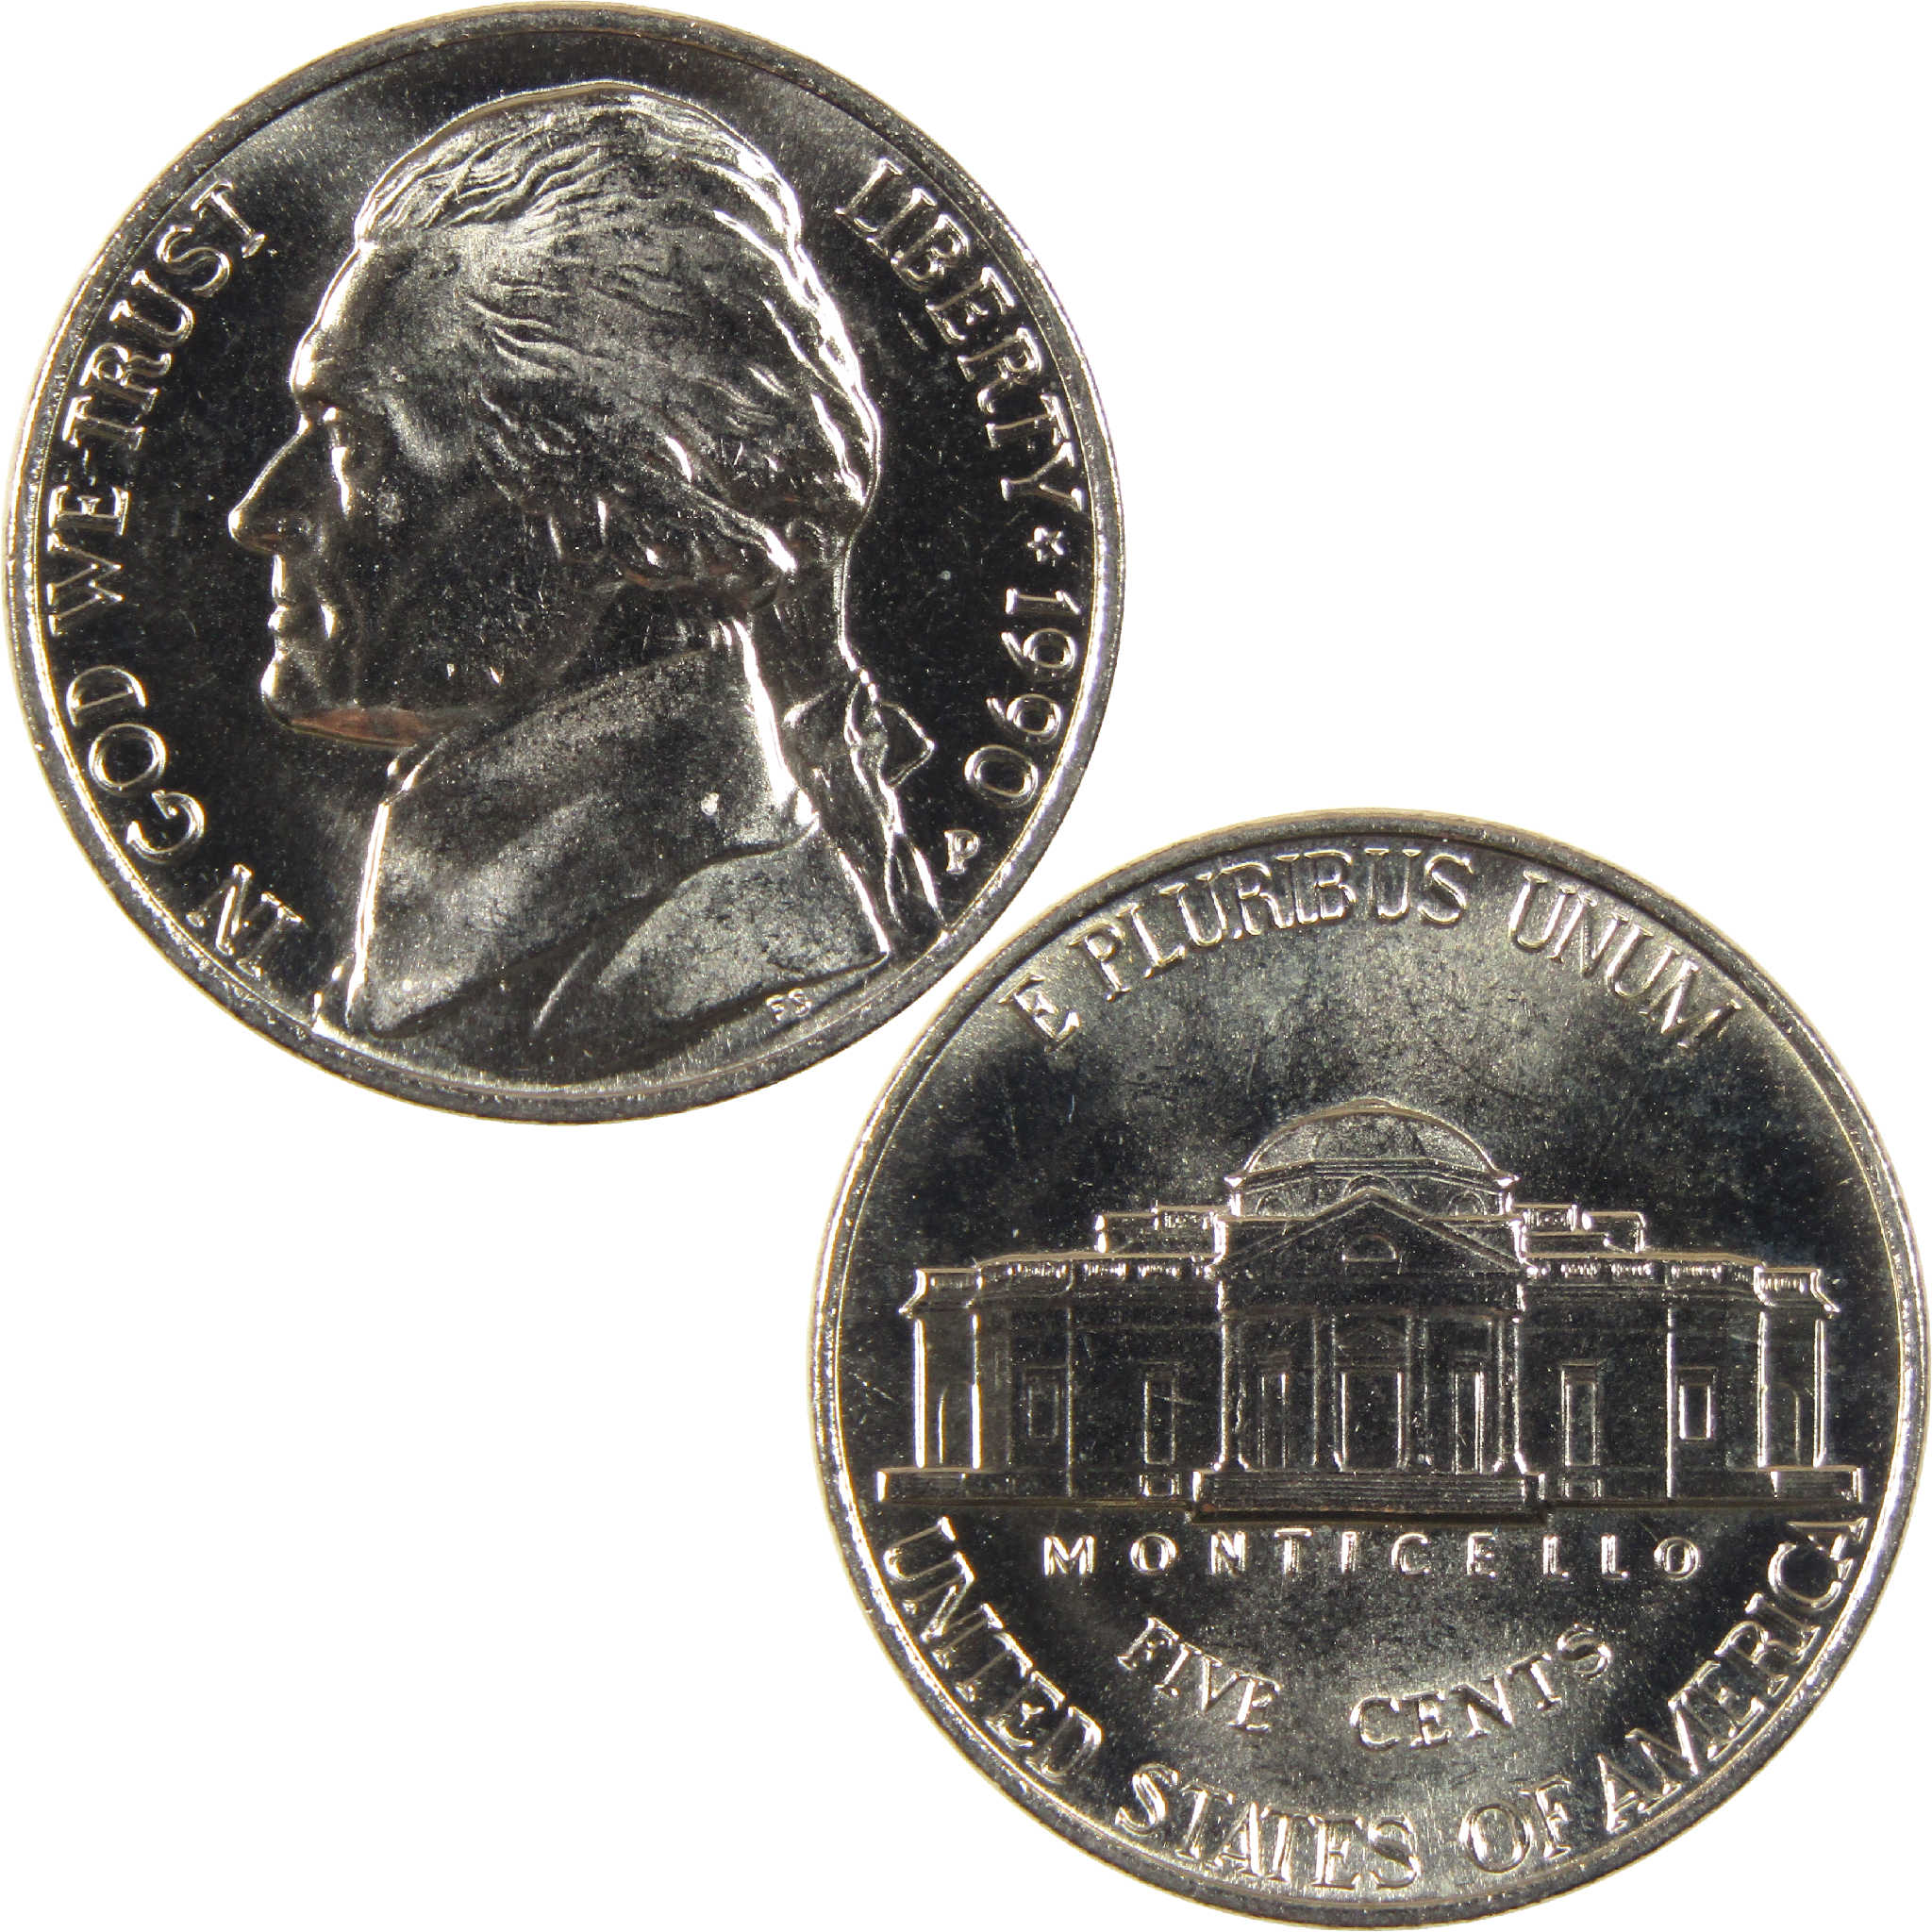 1990 P Jefferson Nickel BU Uncirculated 5c Coin